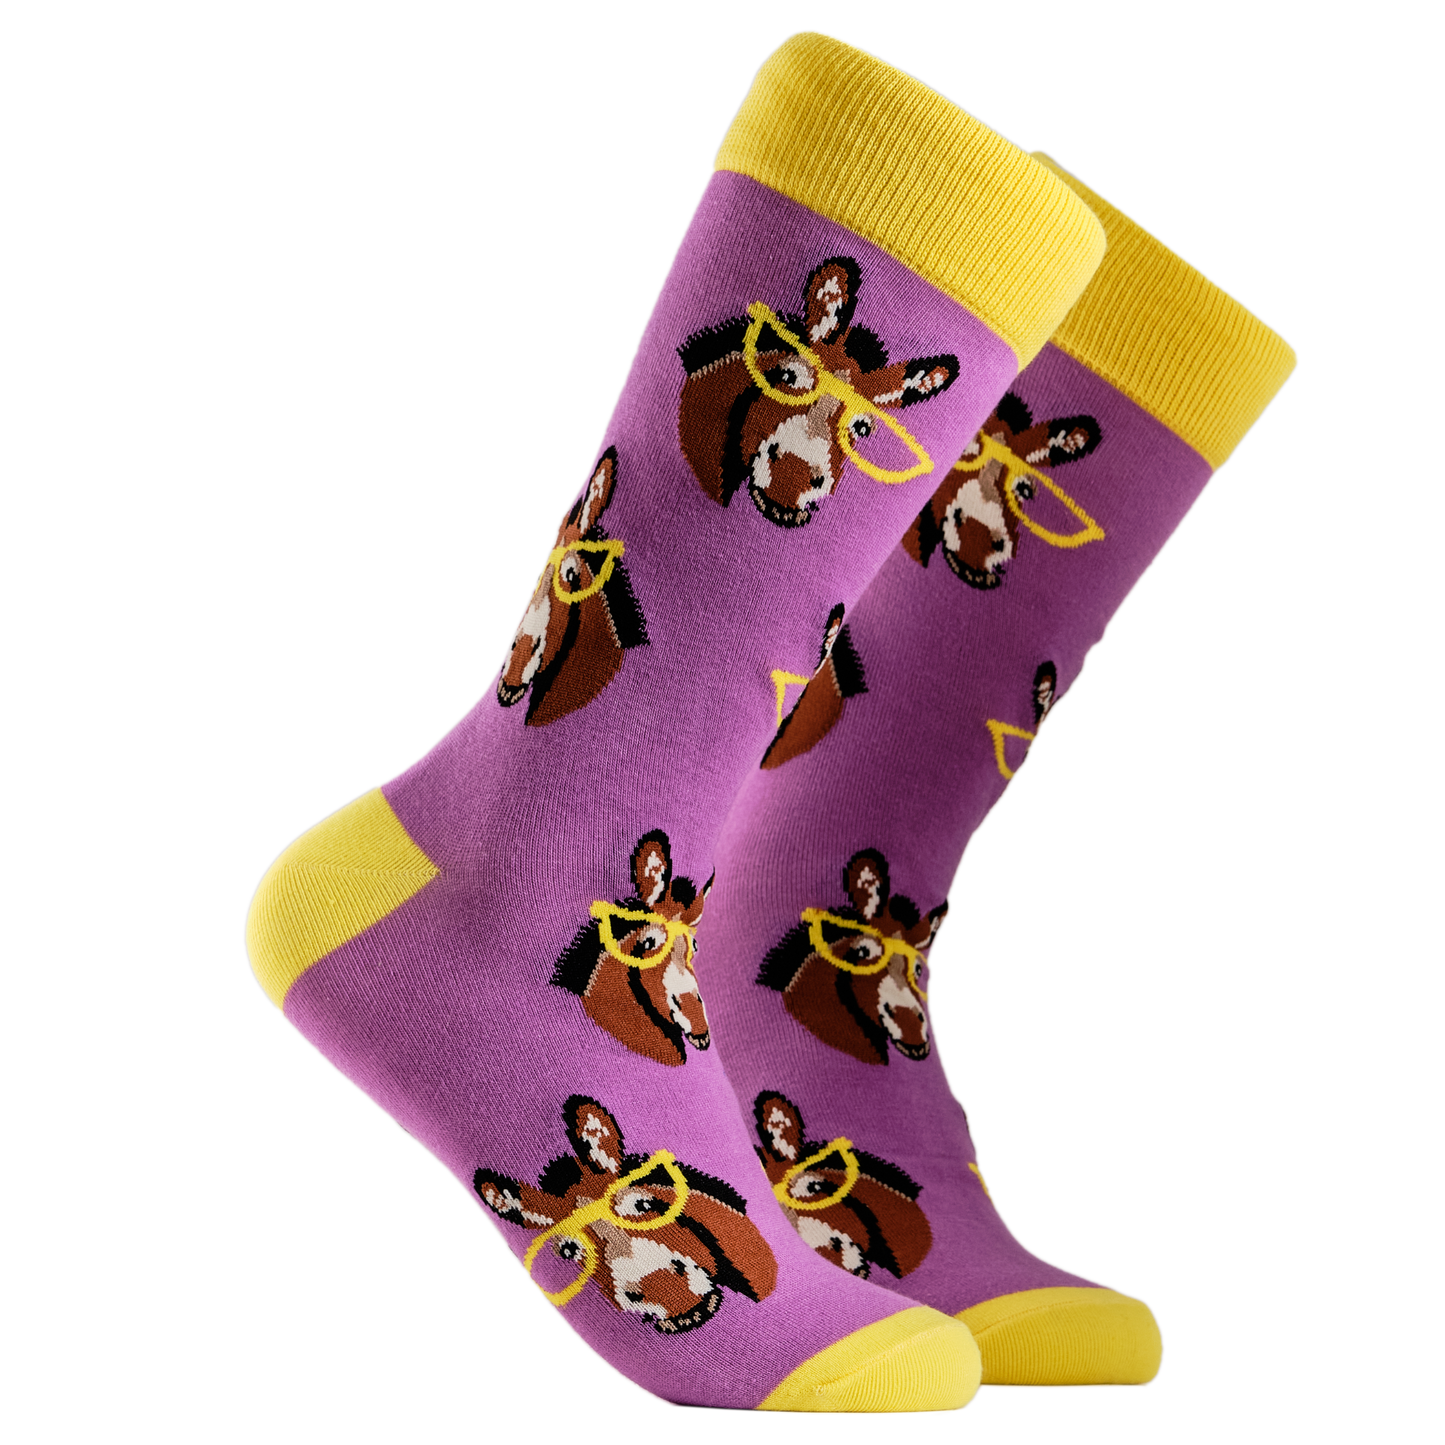 Donkey Socks - Smart Ass. A pair of socks depicting donkeys wearing glasses. Bright pink legs, yellow cuff, heel and toe.